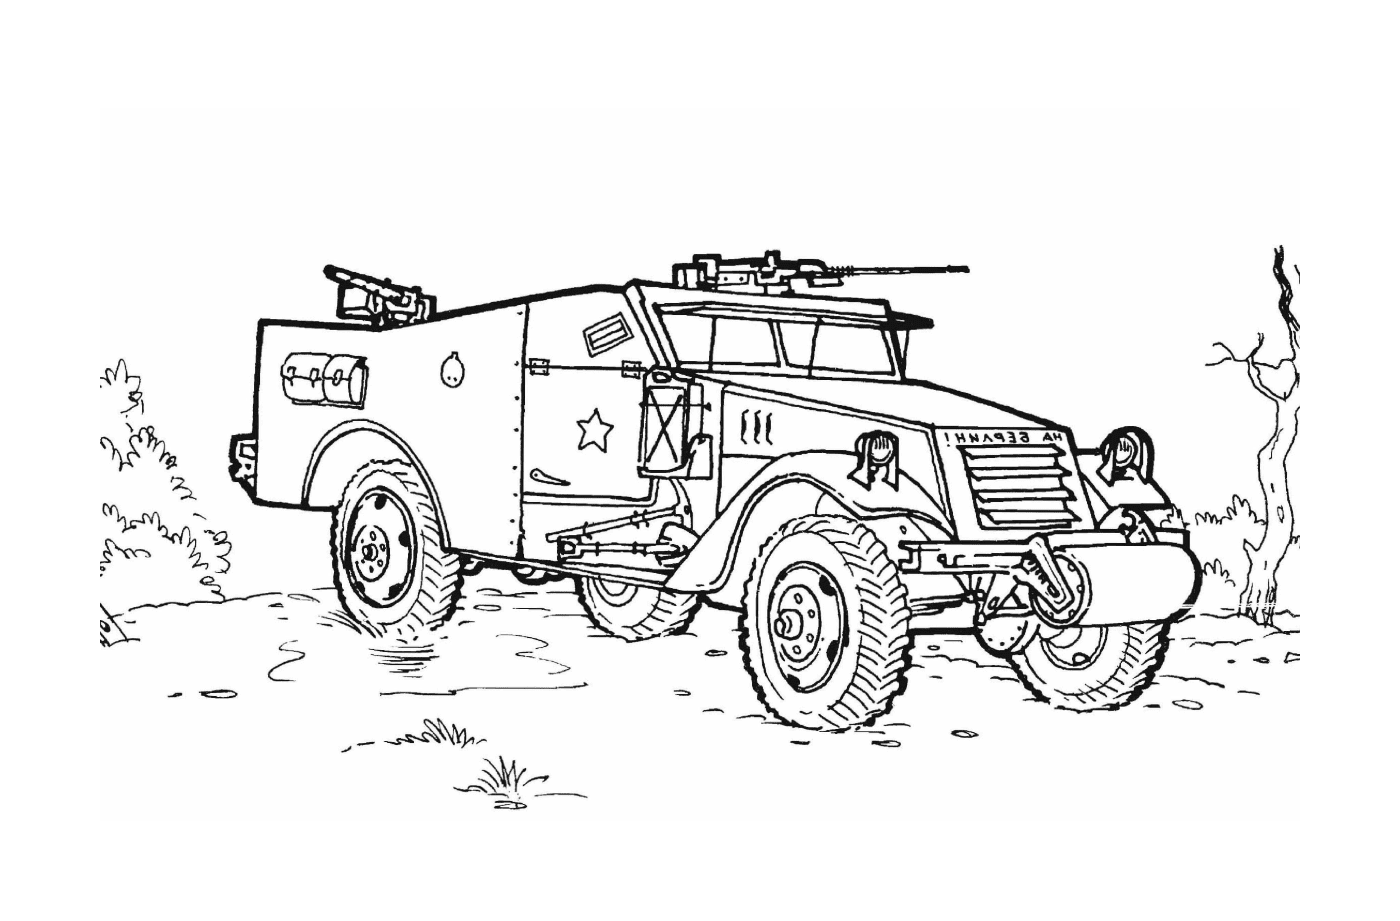  Militärfahrzeug mit Waffen: ein altes Militärfahrzeug 